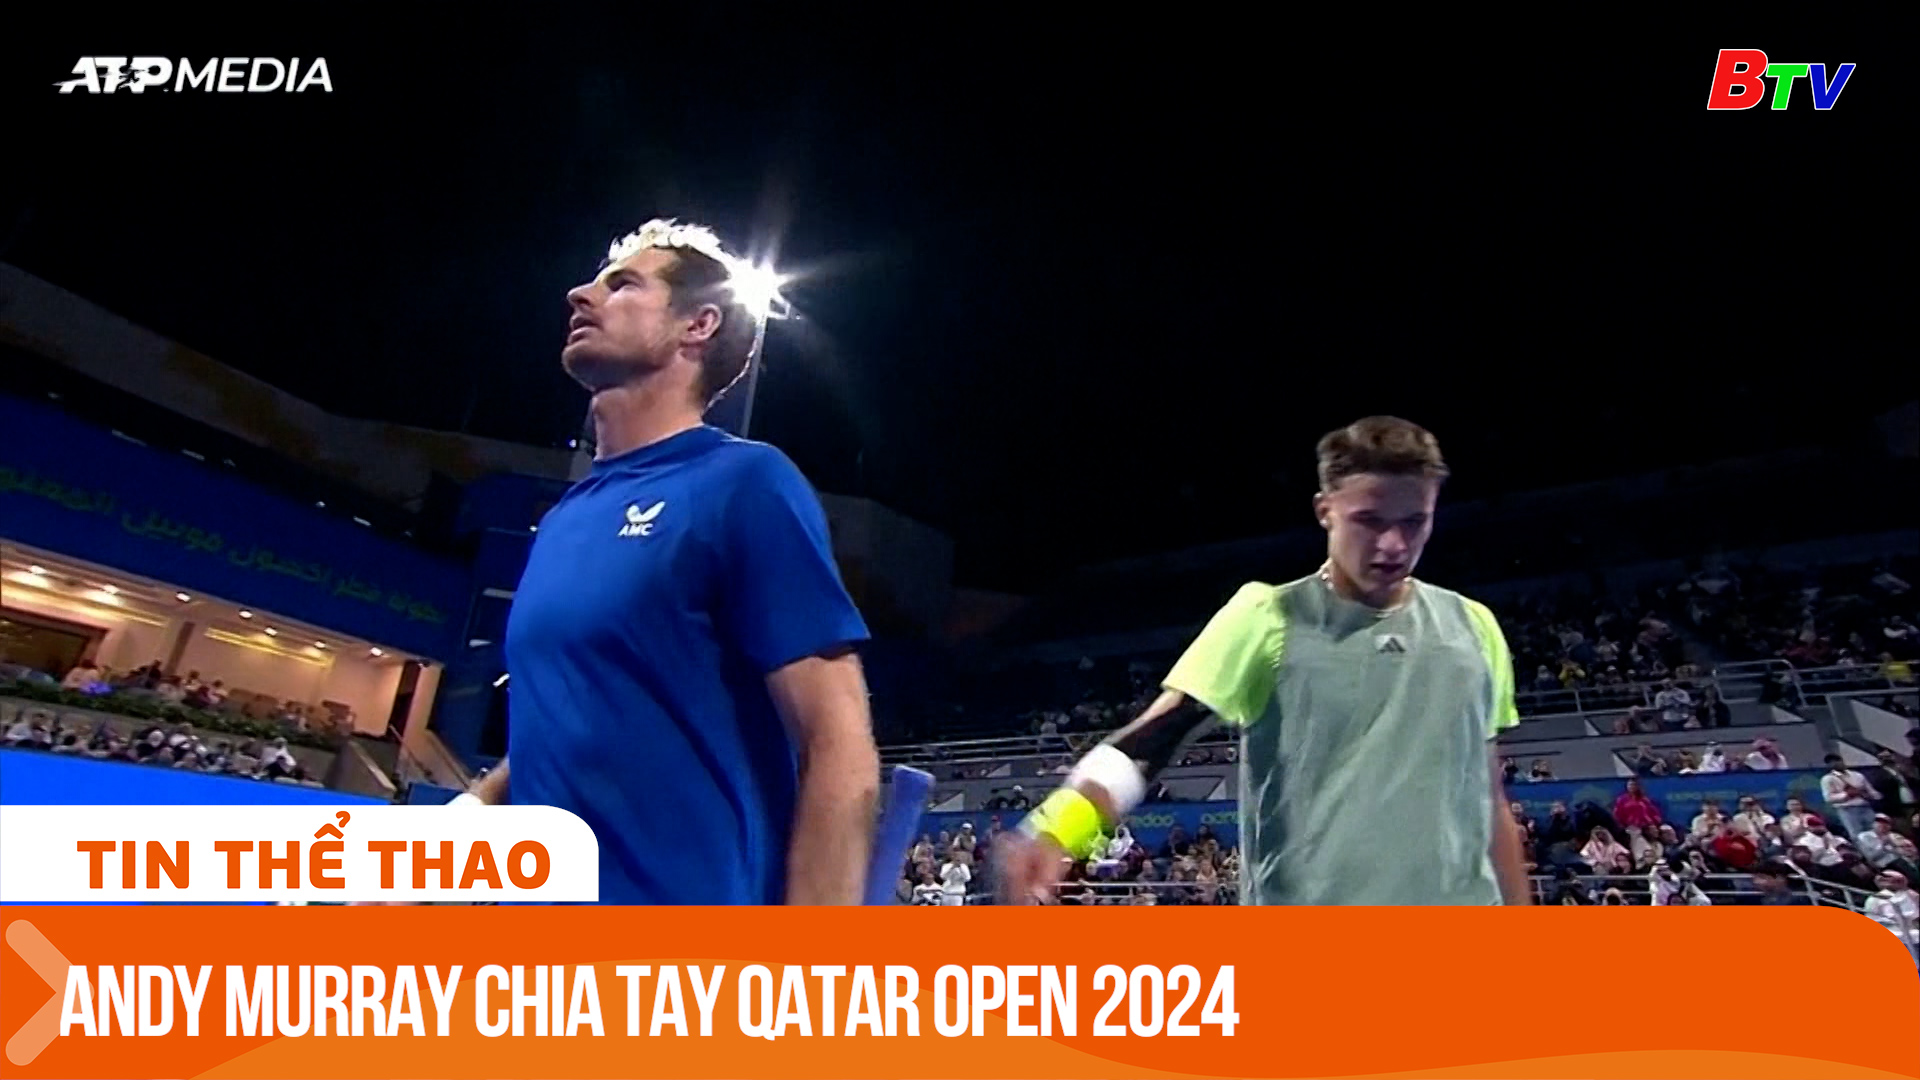 Andy Murray chia tay Qatar Open 2024 | Tin Thể thao 24h